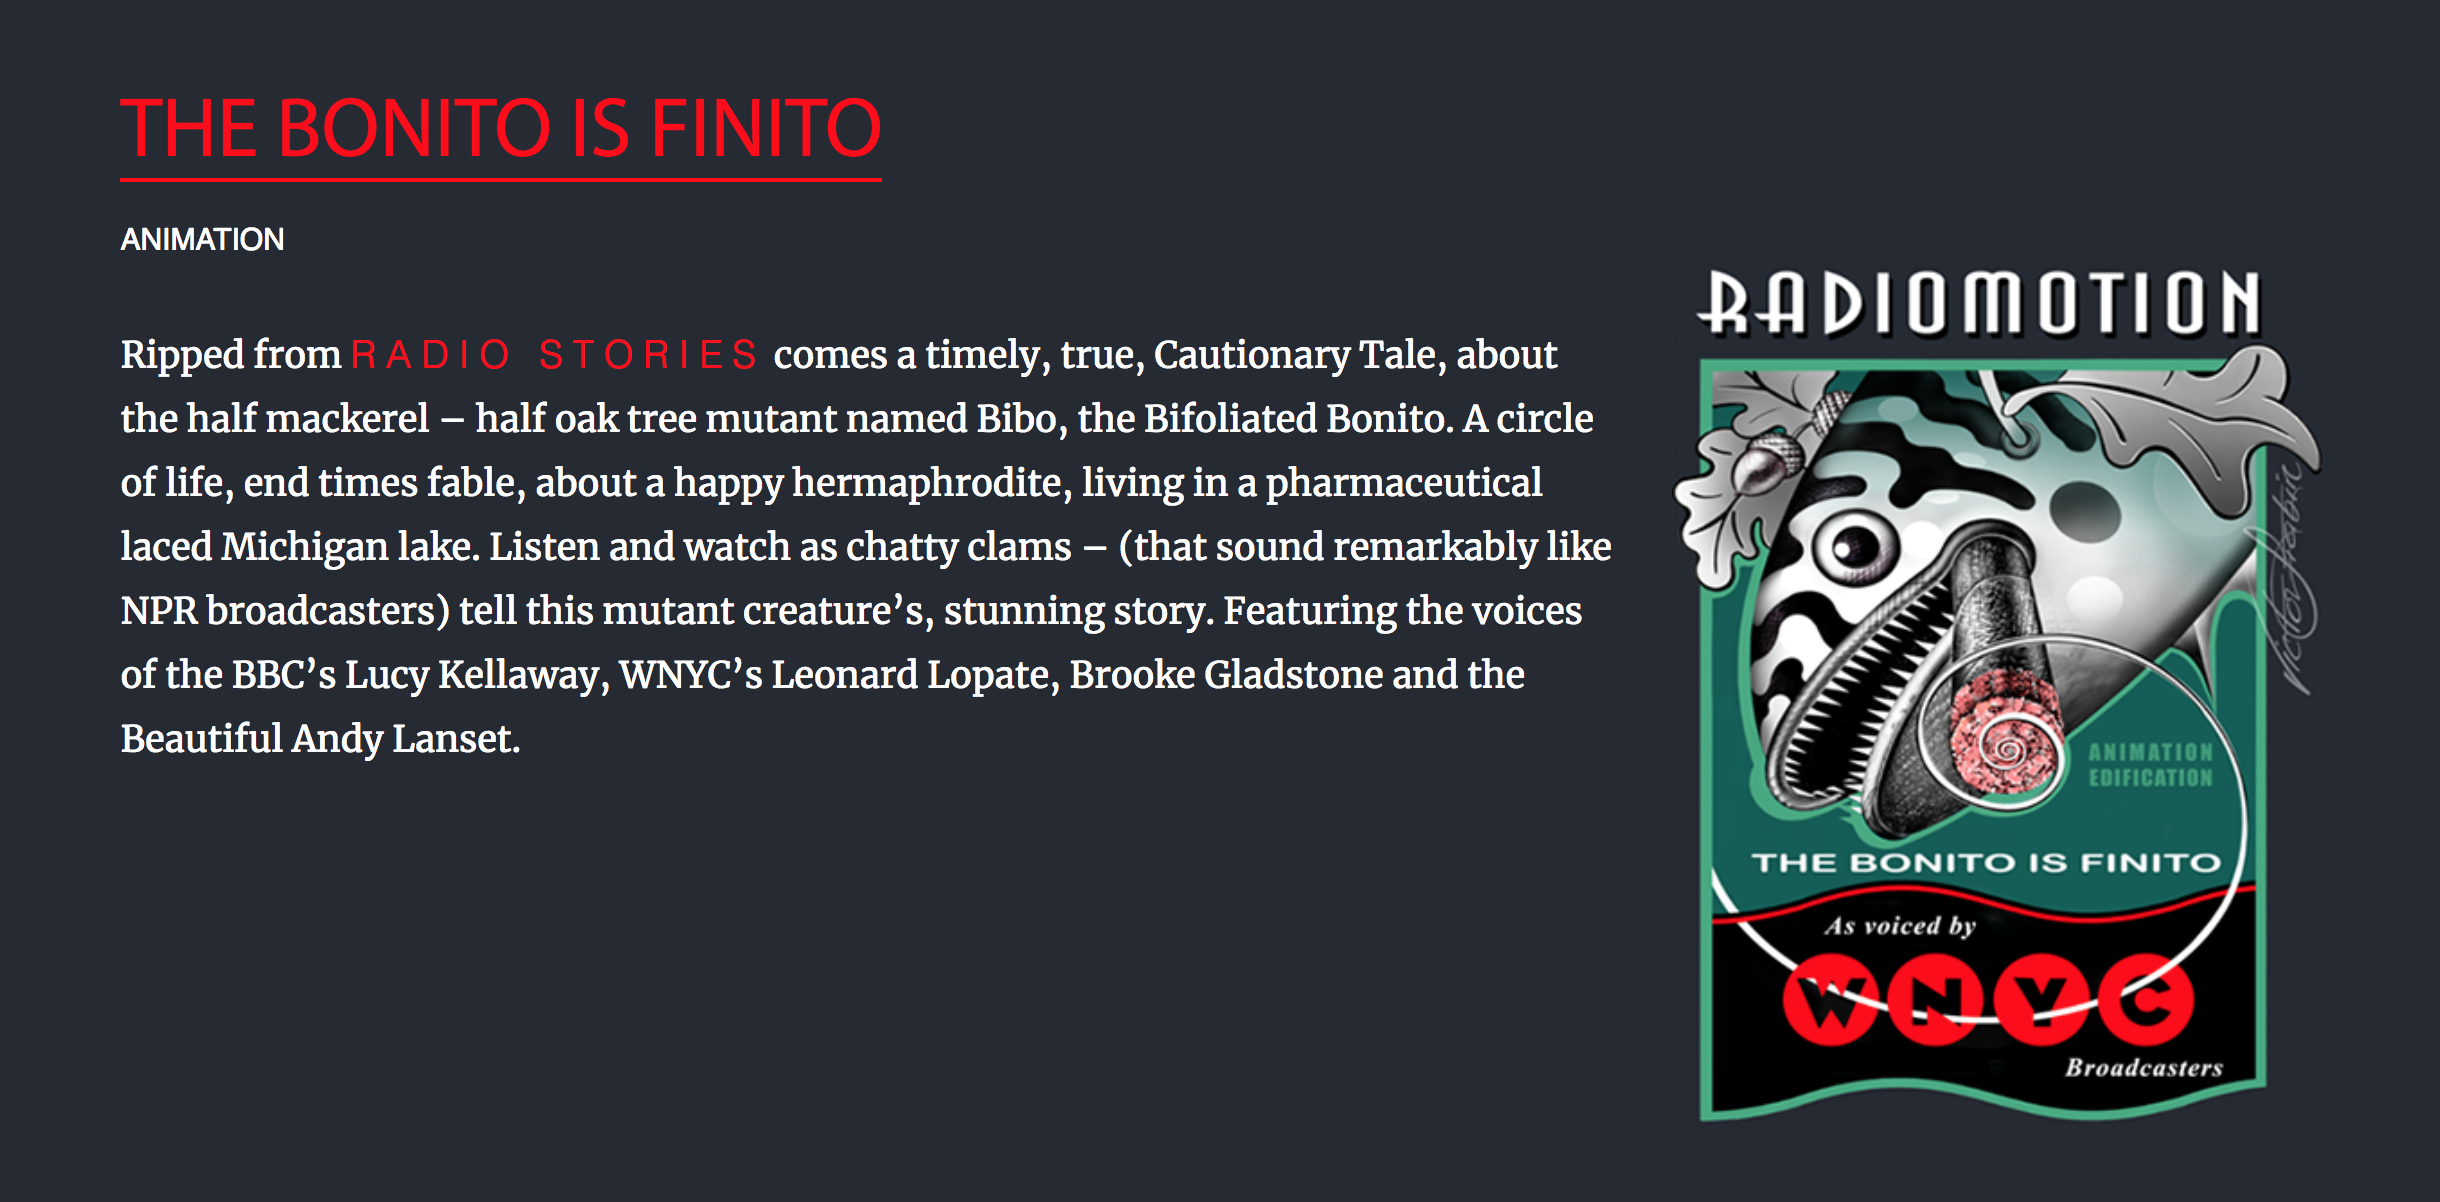 Bonito is Finito Animation